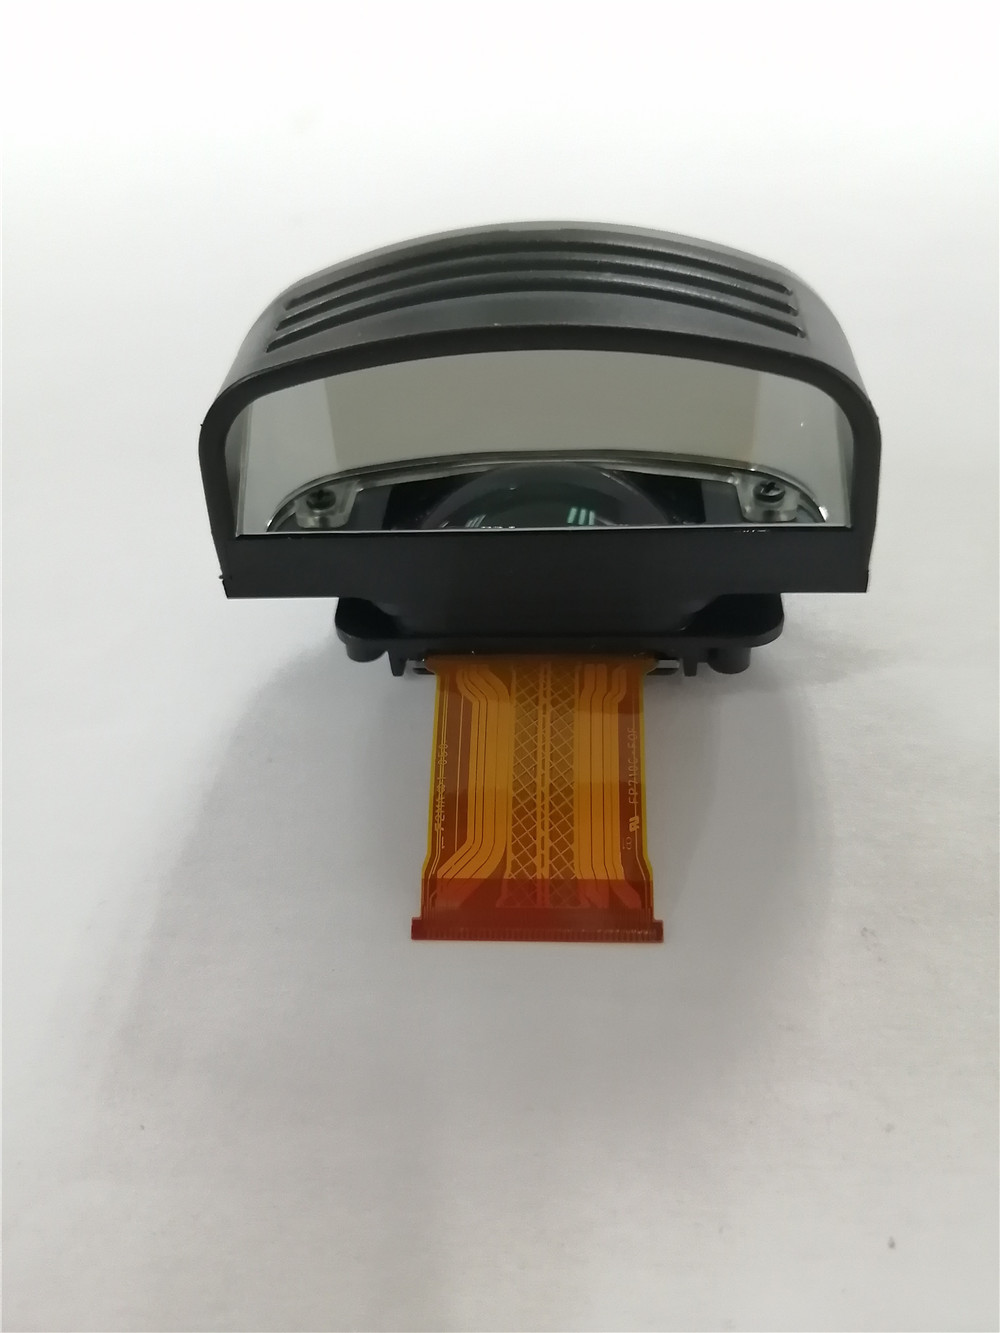 Sony Large FOV Monocular Binocular 0.7